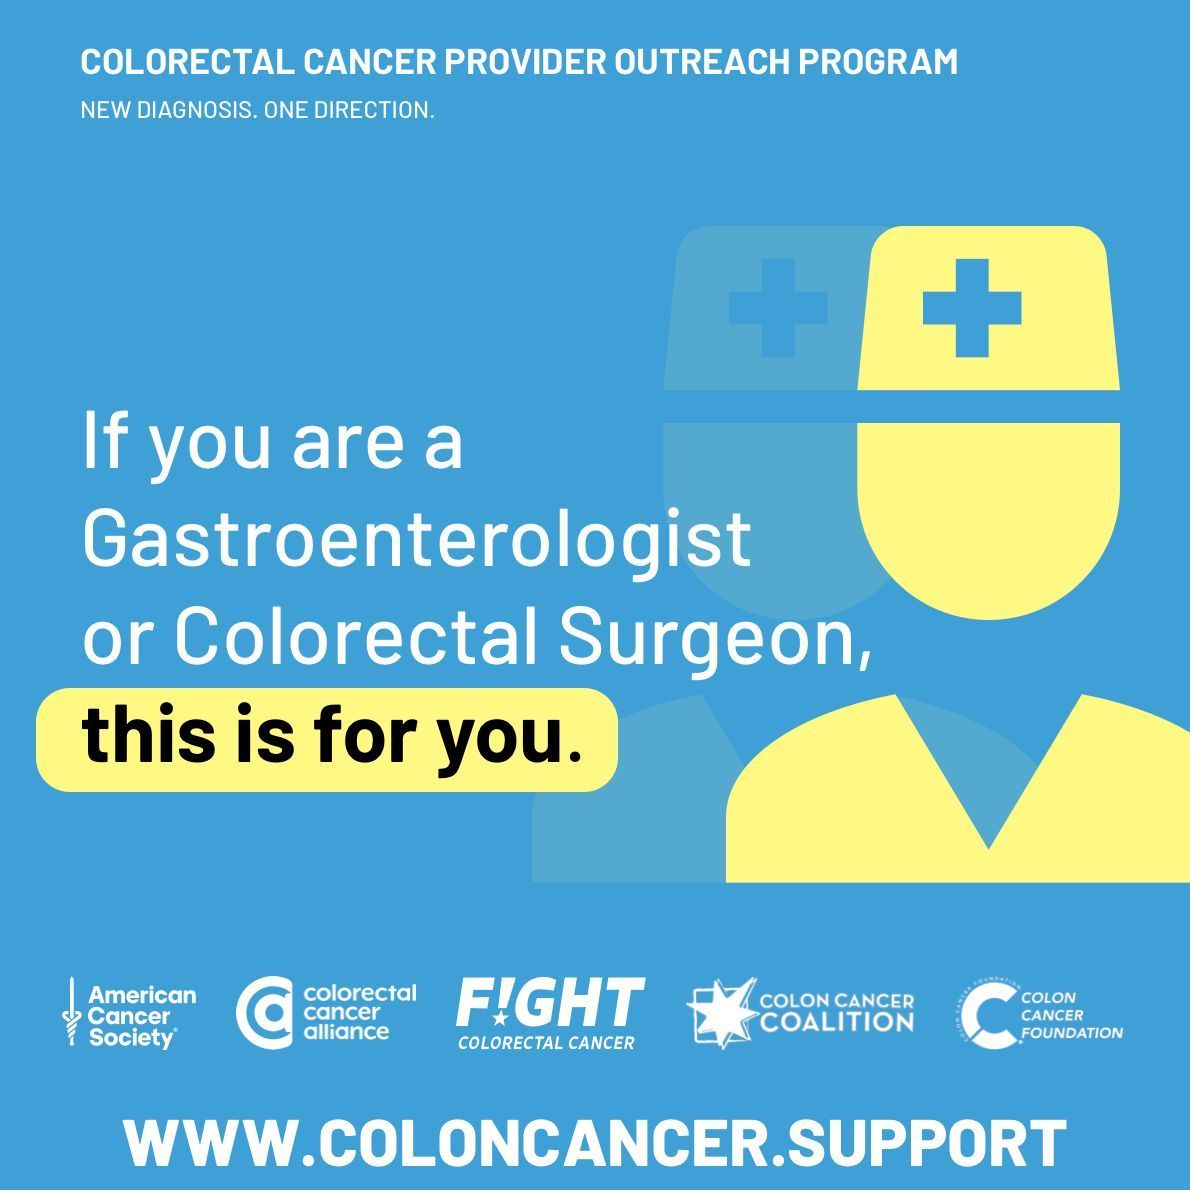 Let's unite in the fight against colorectal cancer.
Awareness is power. Prevention is key. 

Visit coloncancer.support 💙 

#coloncancerawareness #colorectalcancer #bowelcancer #Never2Young #BlueforCRC #ColonCancerSupport #ScreeningSavesLives